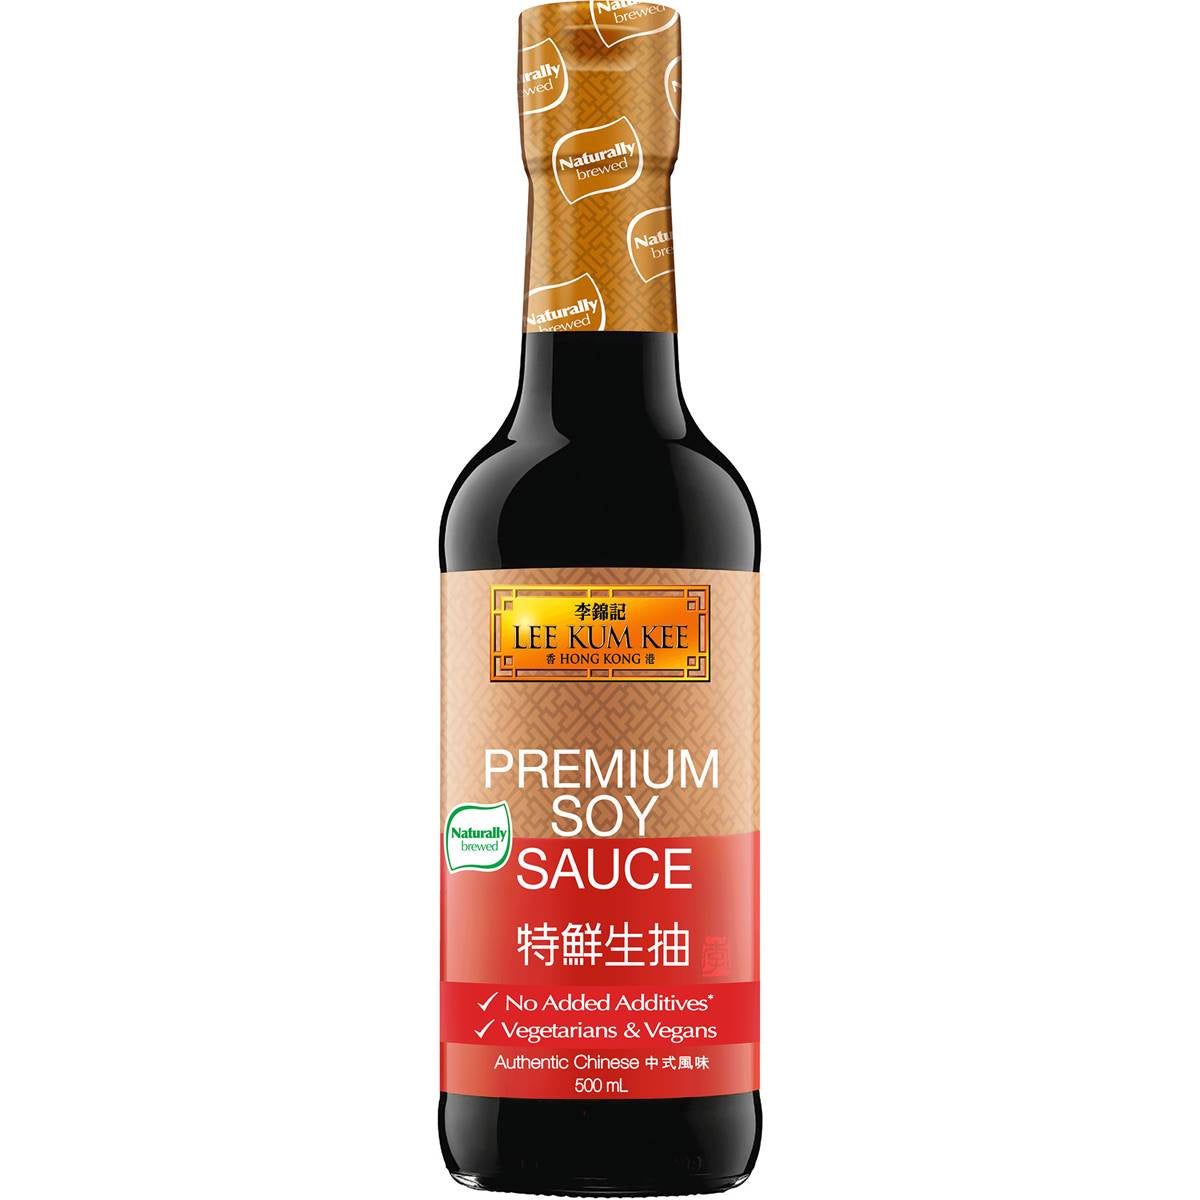 Lee Kum Kee Soy Sauce Premium 500ml